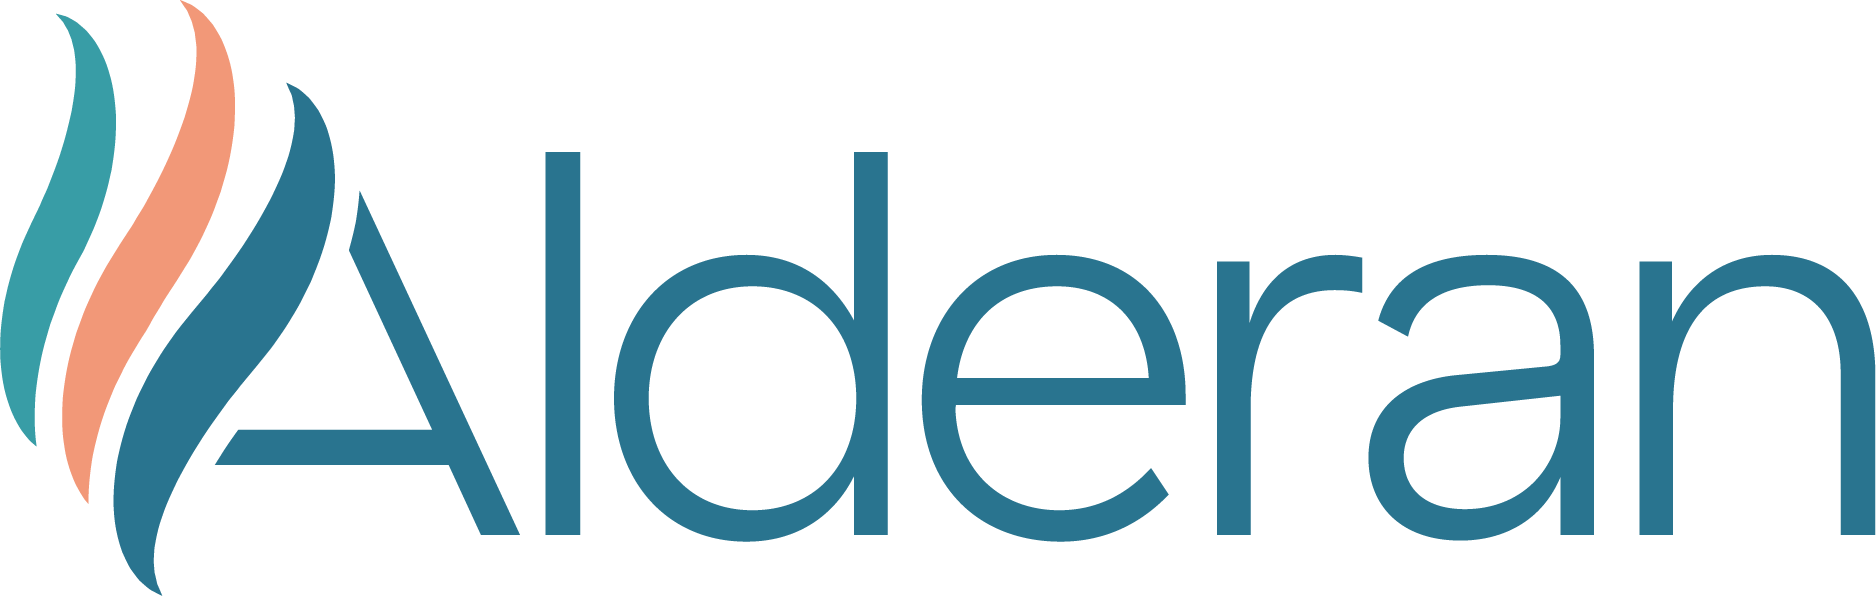 Logo Alderan